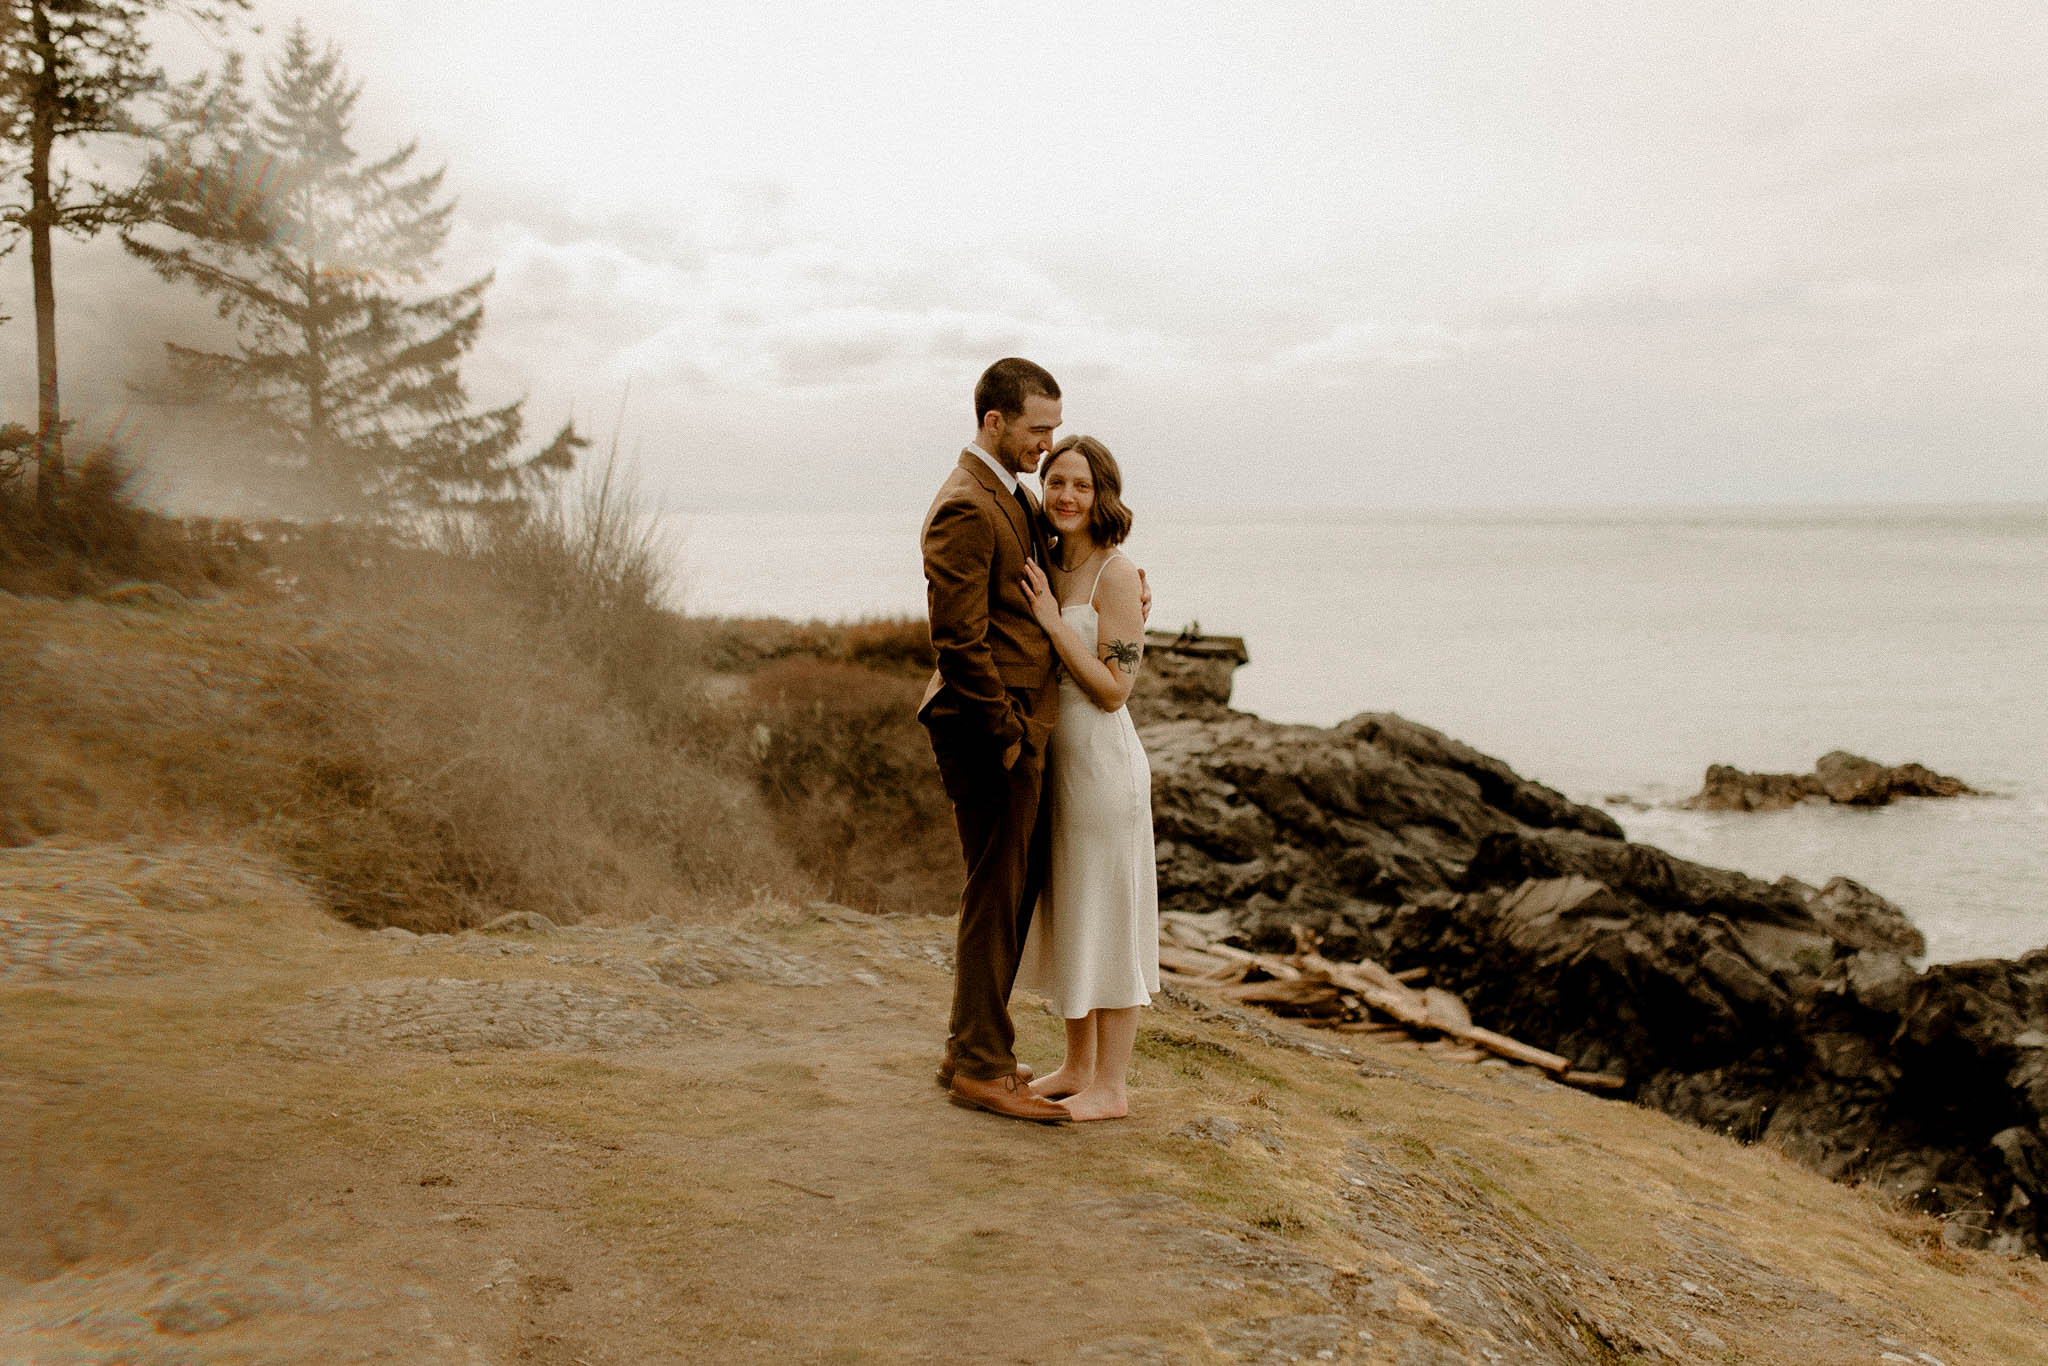 Getting married on Whidbey Island, WA. 